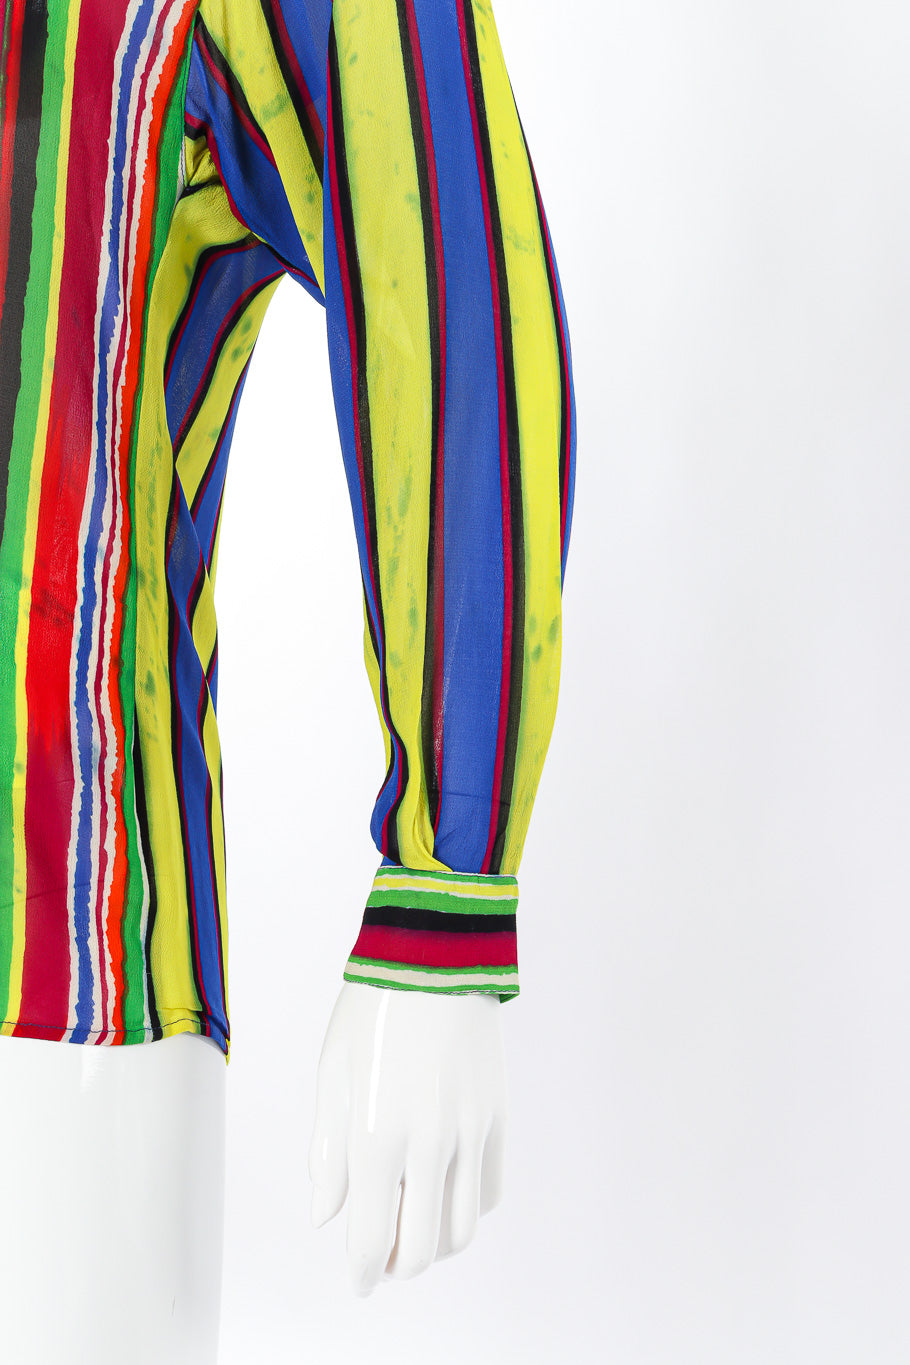 Vintage Versus Versace RYGB Long Sleeve Button Up front sleeve closeup @Recessla